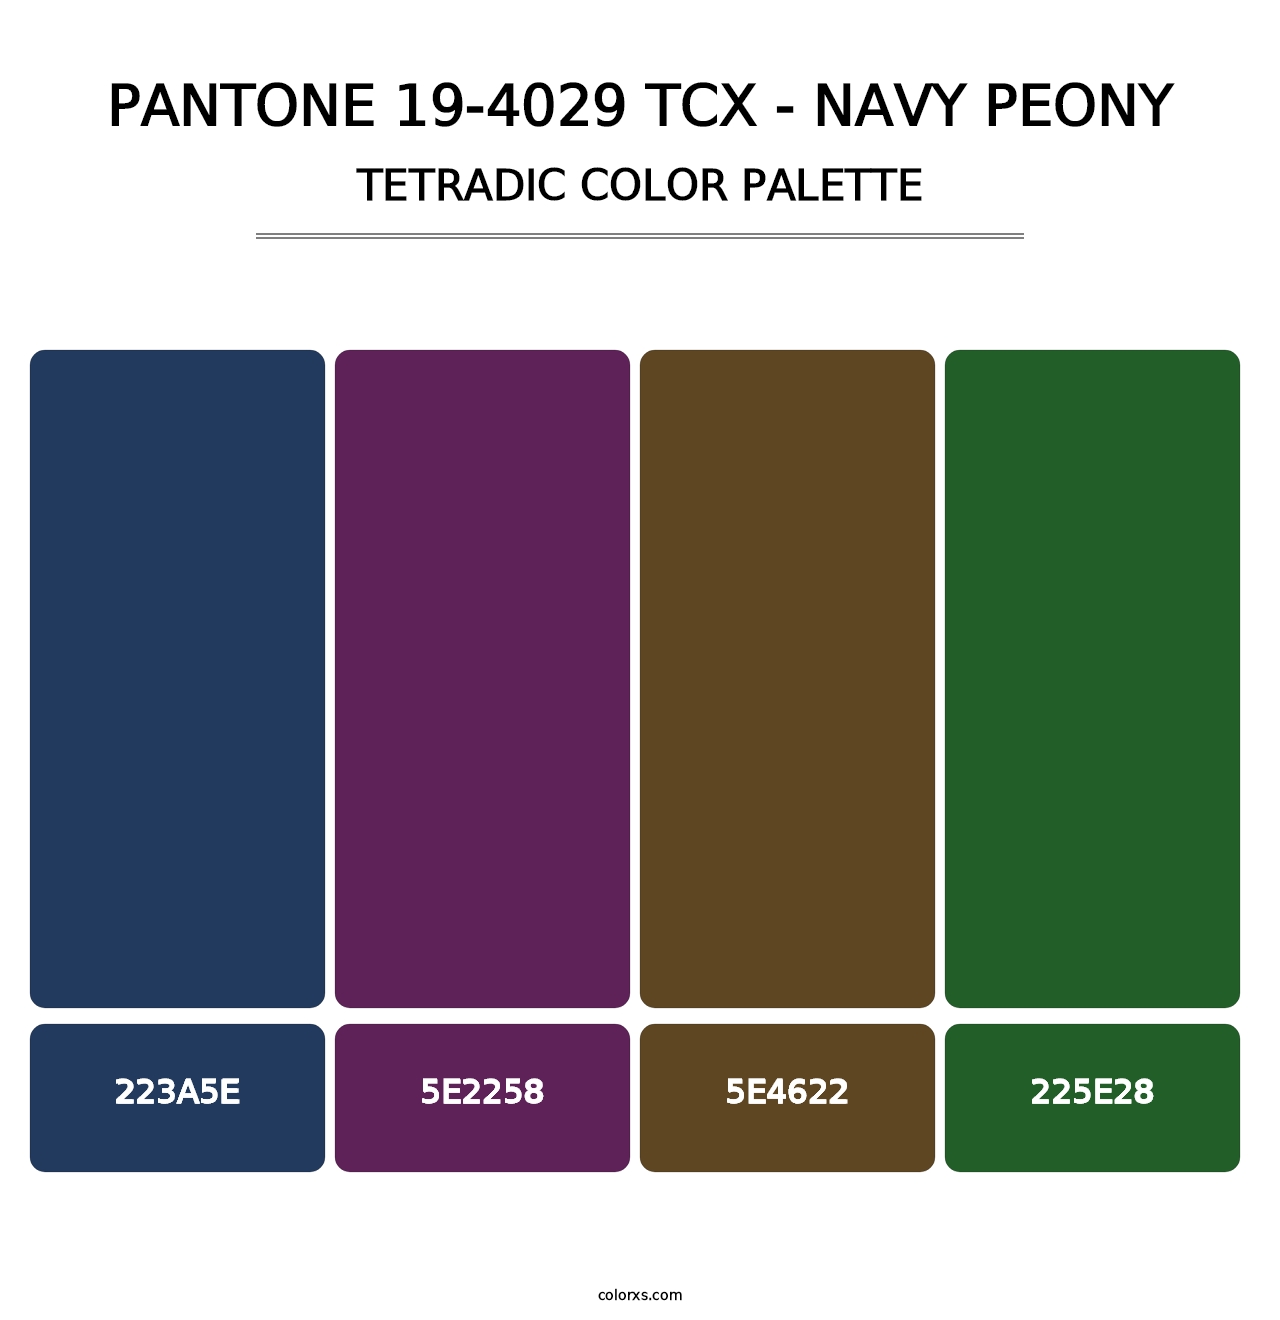 PANTONE 19-4029 TCX - Navy Peony - Tetradic Color Palette